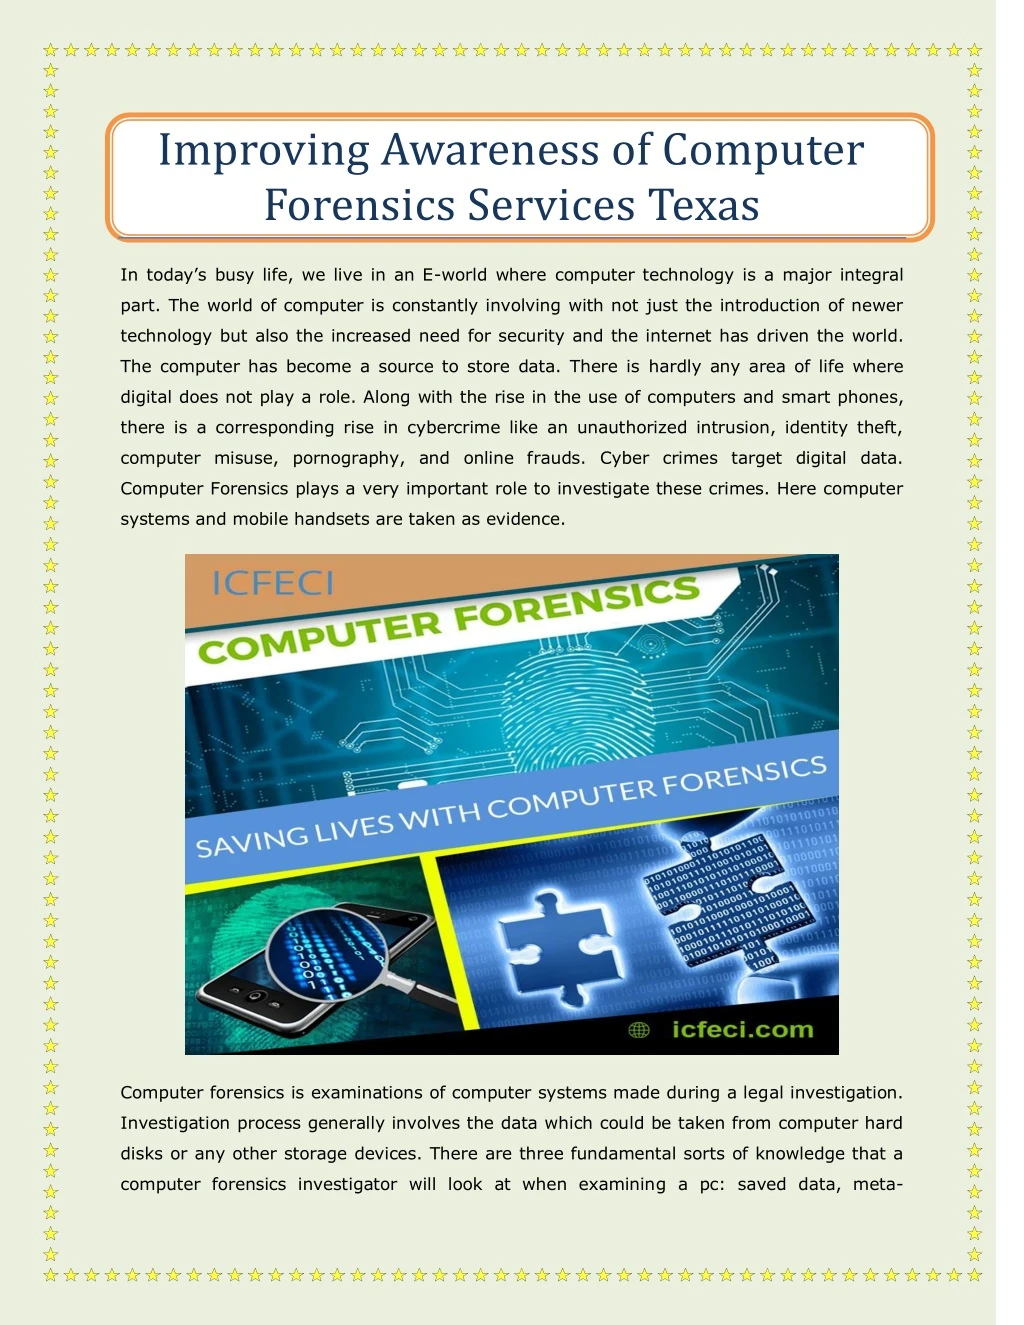 improving awareness of computer forensics